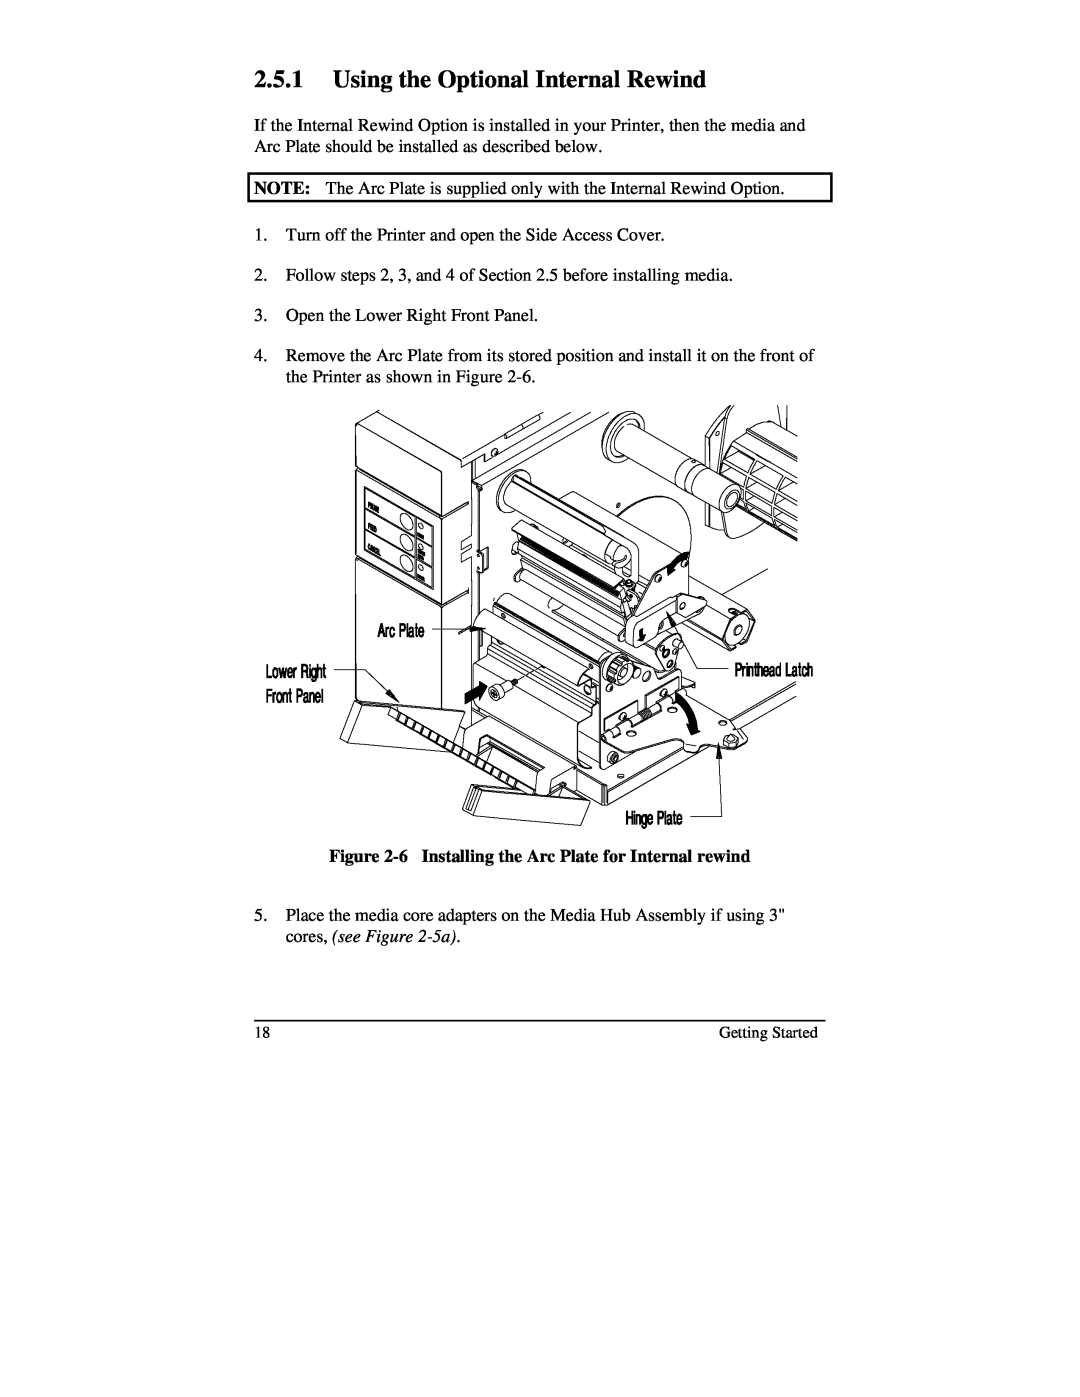 Brady 2024, 2034 manual Using the Optional Internal Rewind, 6 Installing the Arc Plate for Internal rewind 